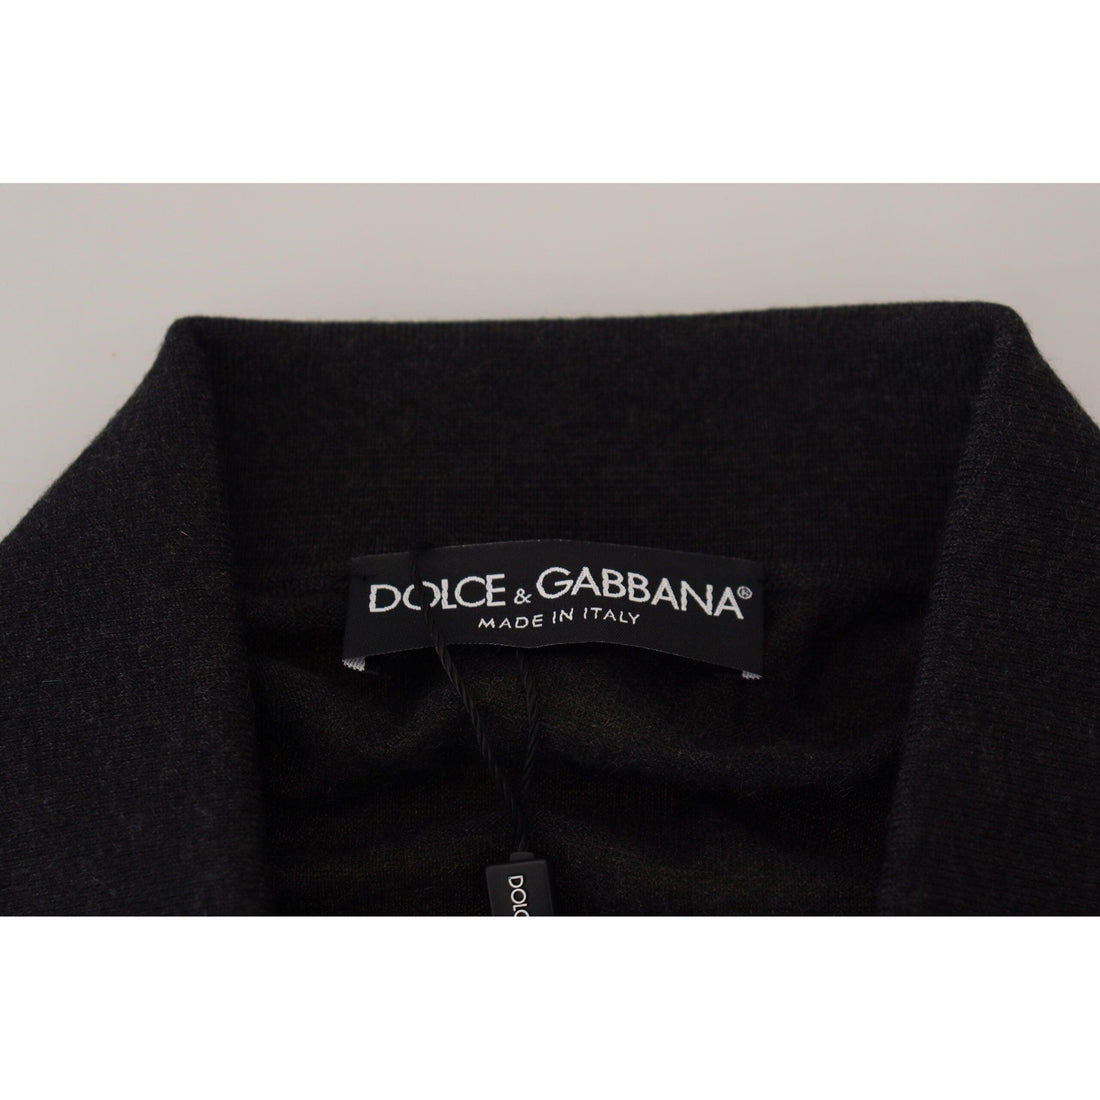 Dolce & Gabbana Black Cashmere Collared Pullover Sweater